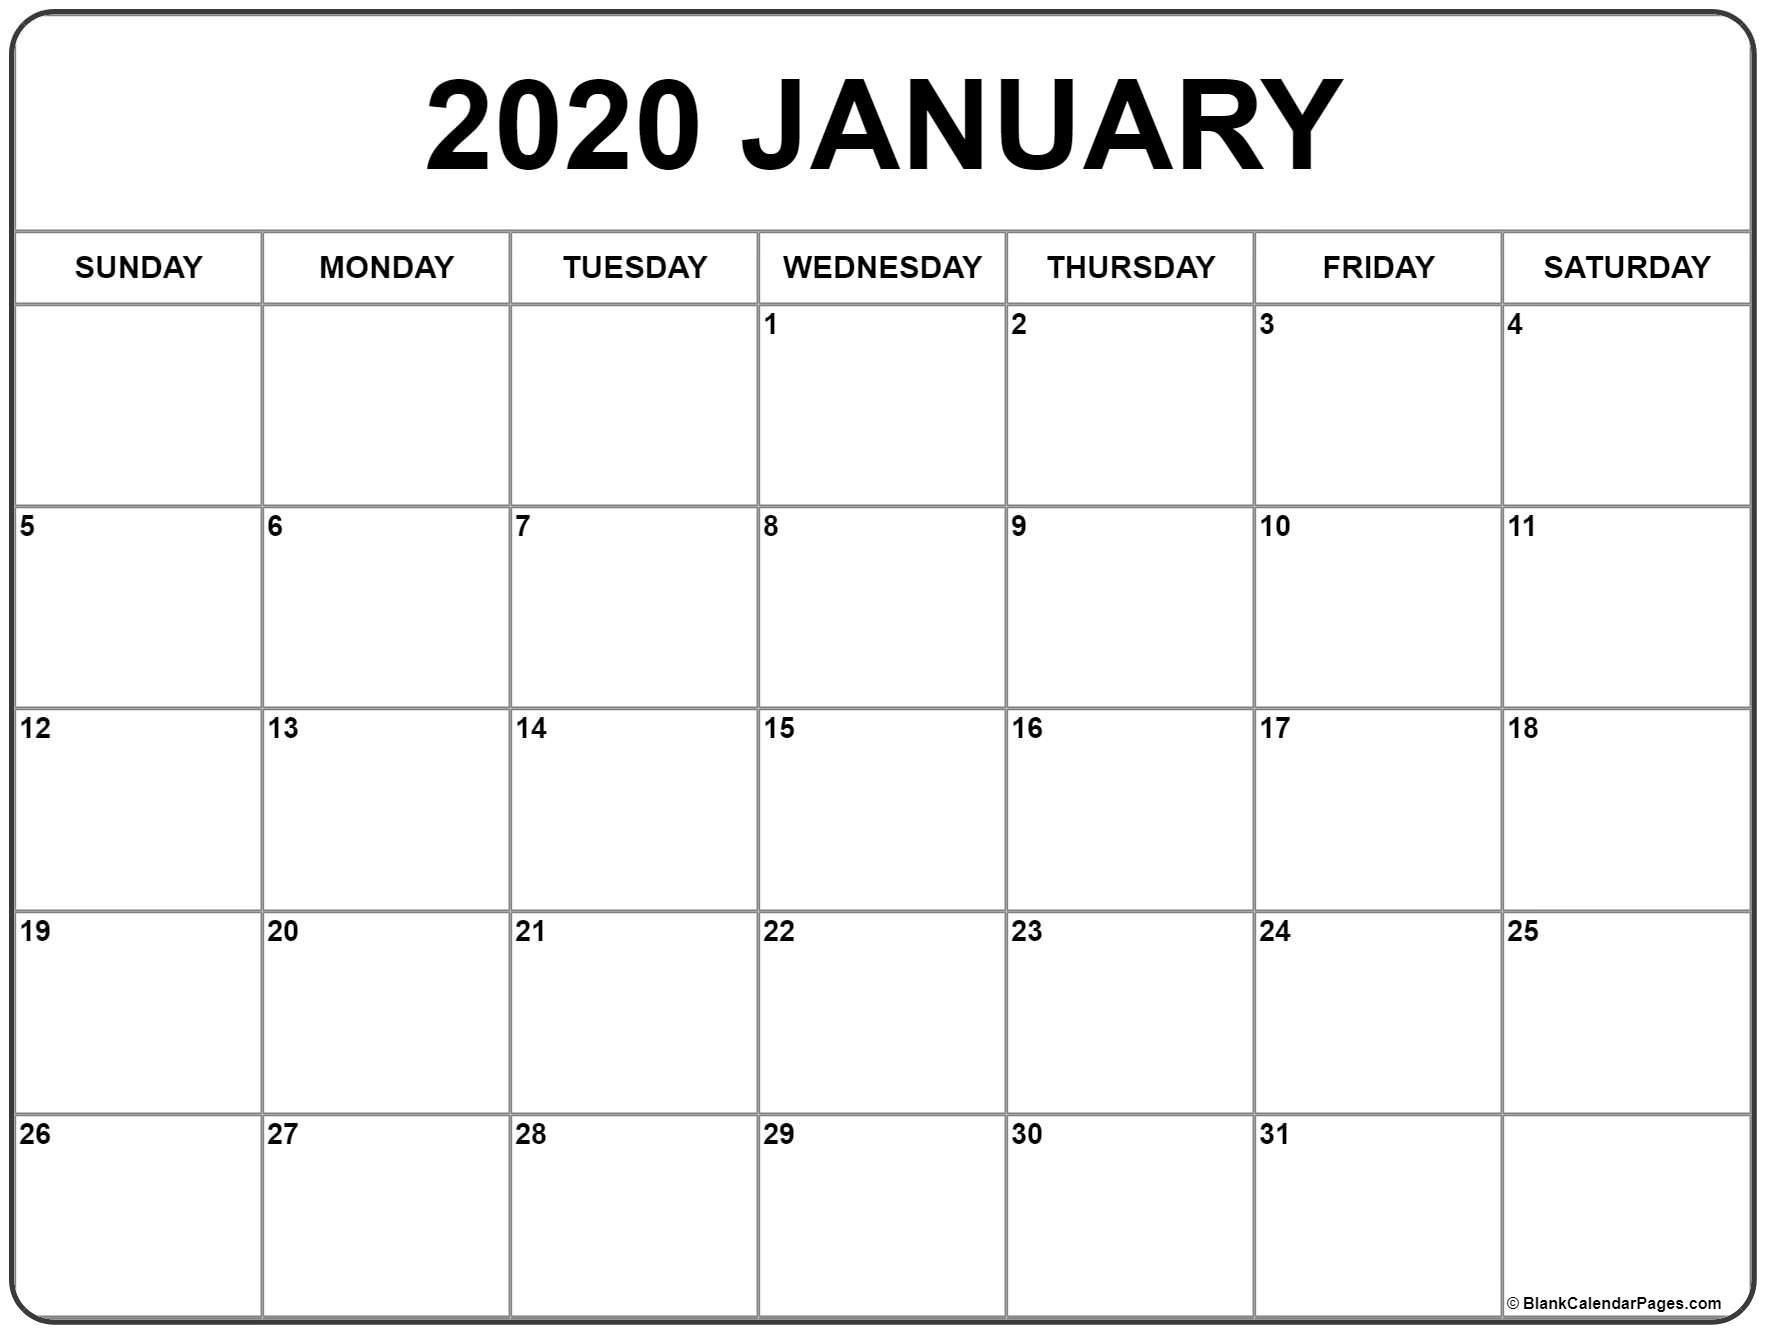 January 2020 Calendar | Free Printable Monthly Calendars-January 2020 Daily Calendar